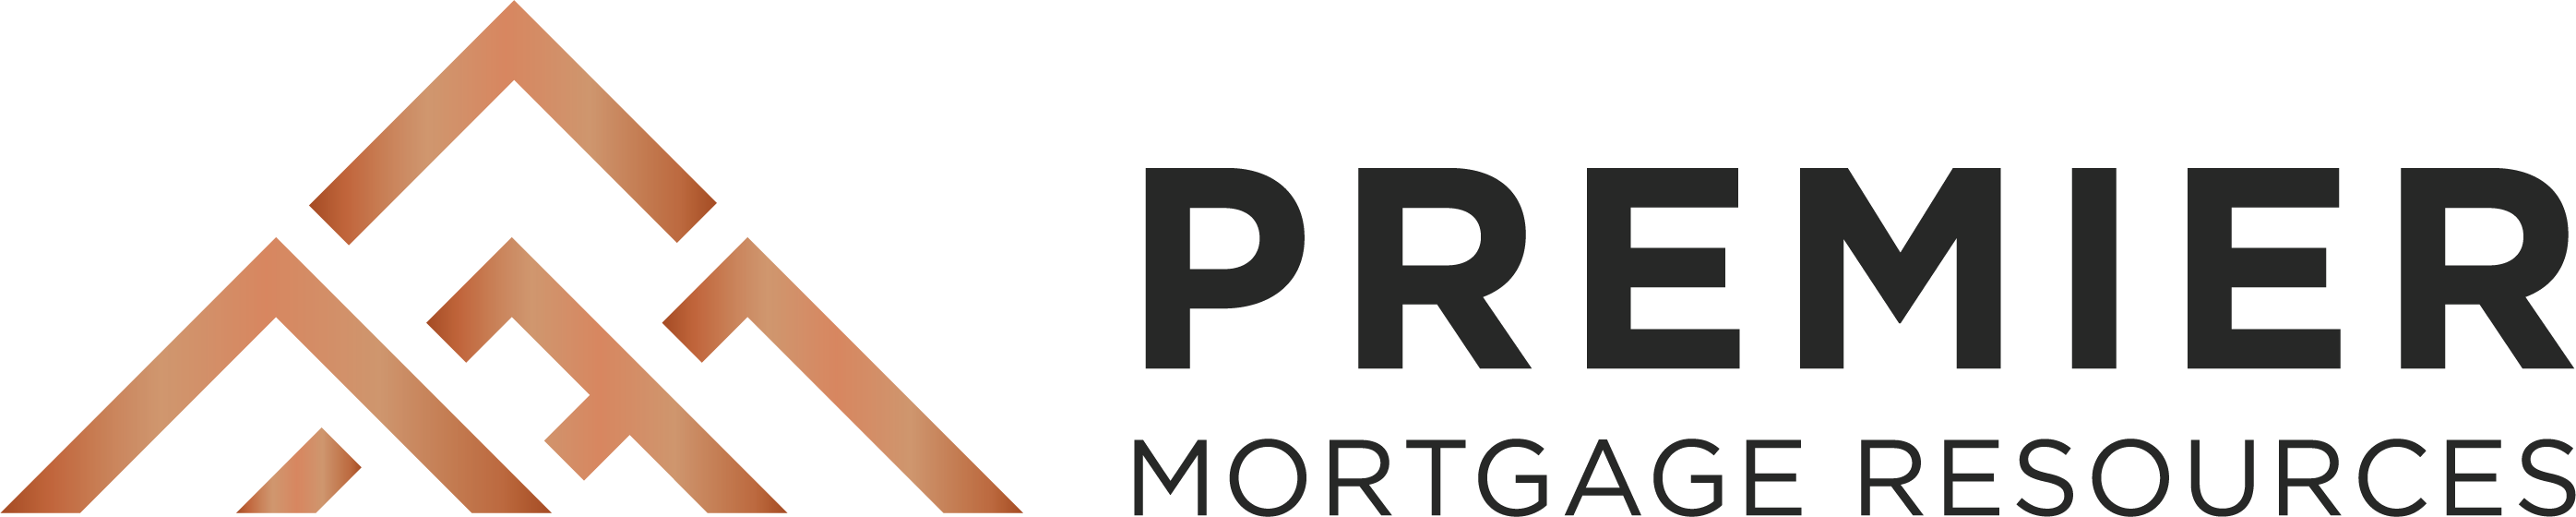 Premier Mortgage Resources, LLC logo